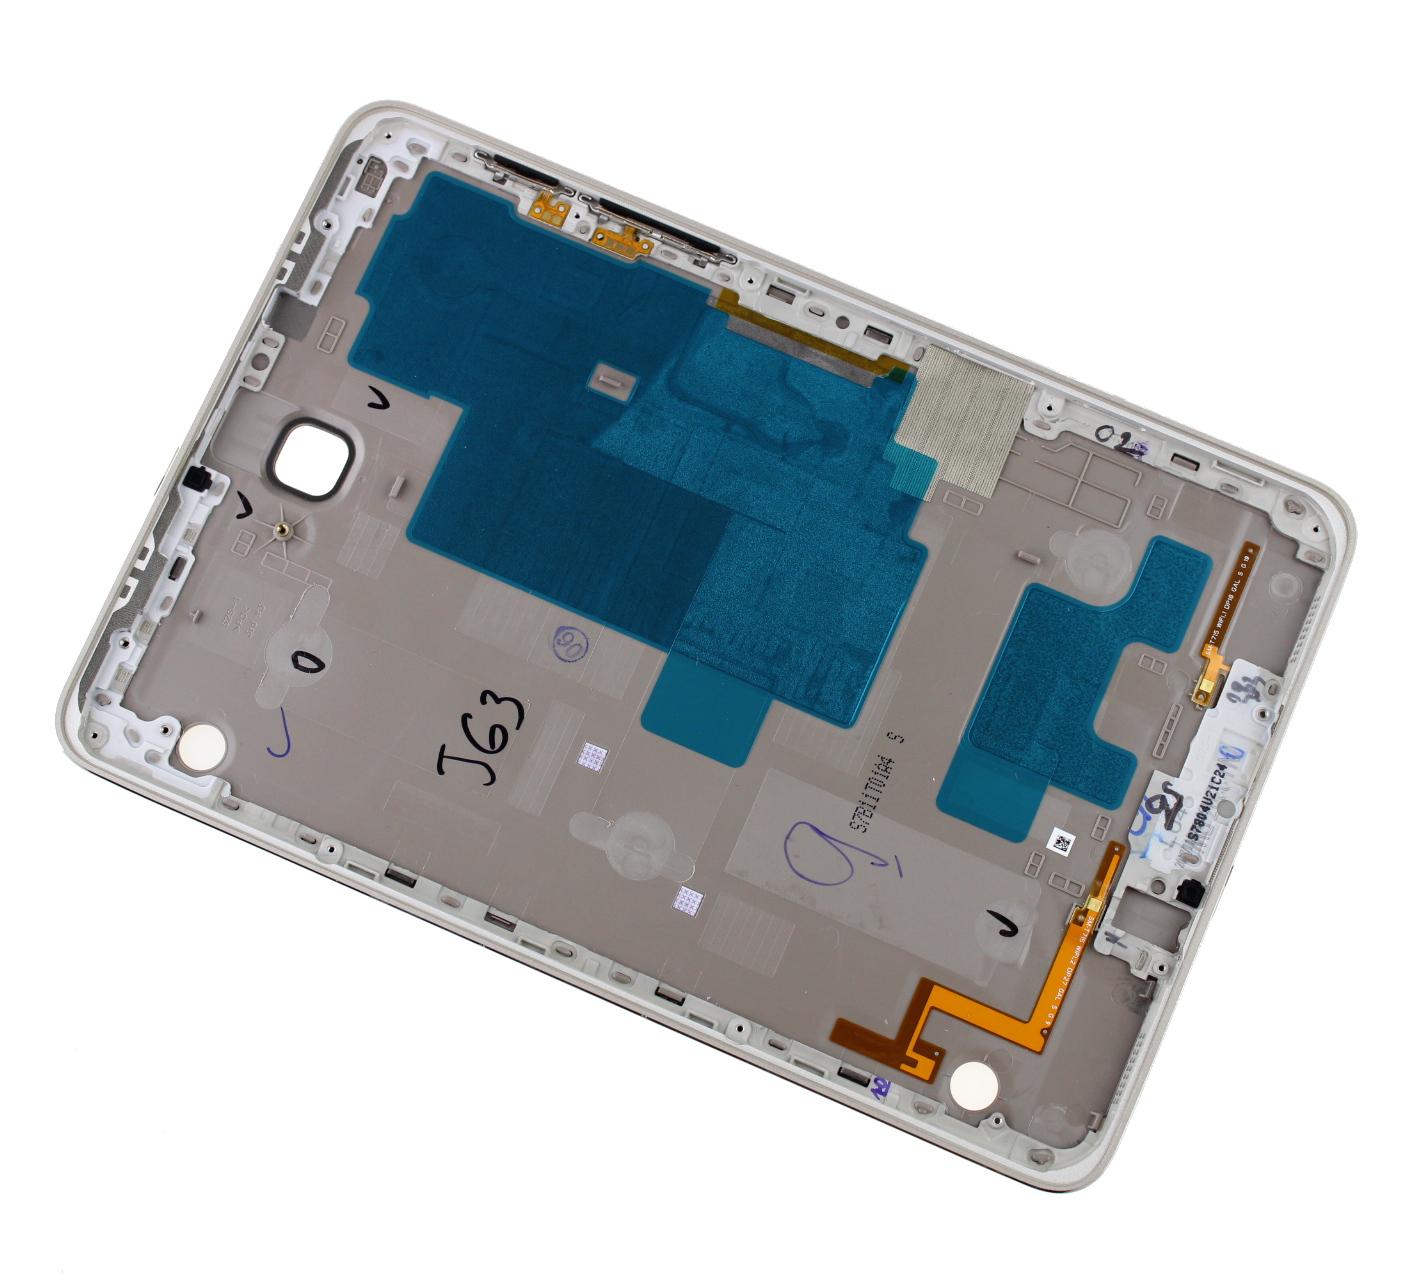 Originál kryt baterie/korpus Samsung Galaxy Tab 2 SM-T719 zlatý